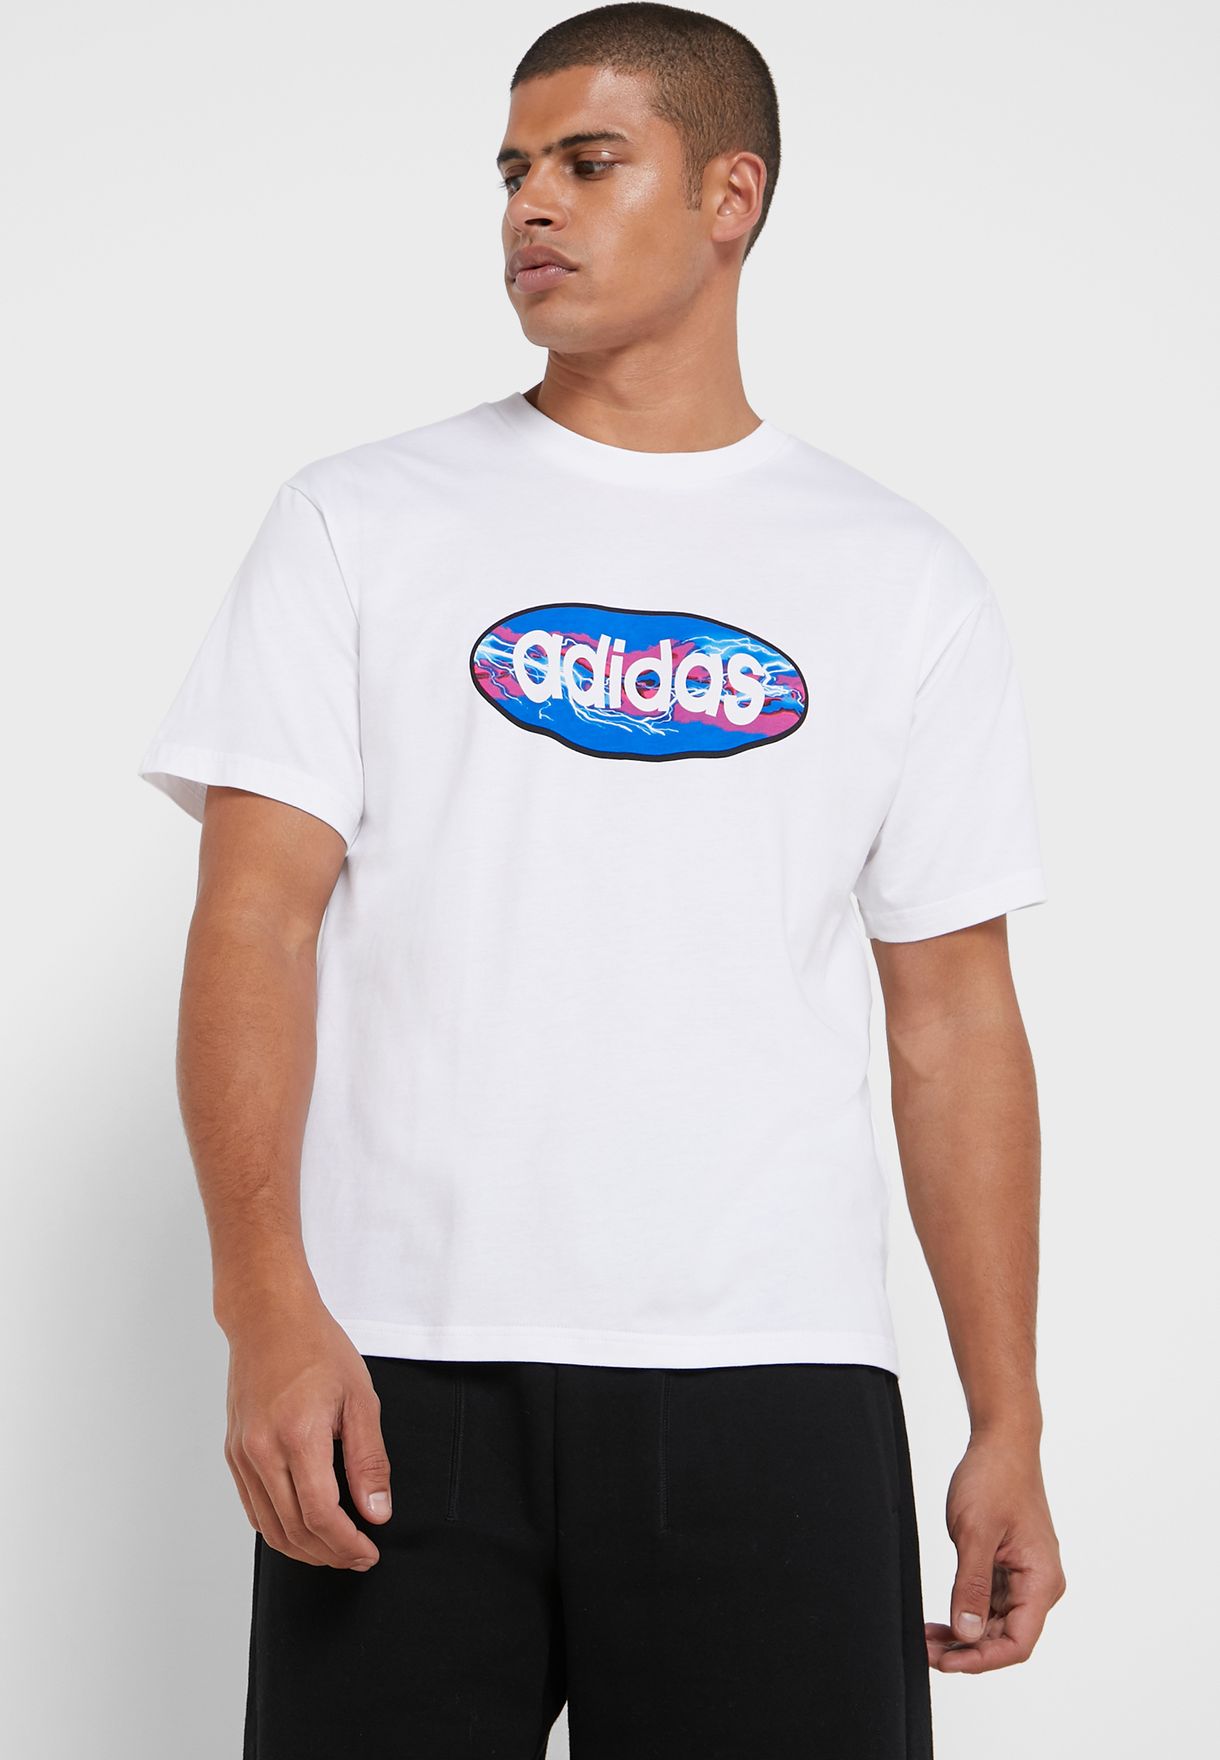 Buy Adidas Originals White Oval T Shirt For Men In Mena Worldwide